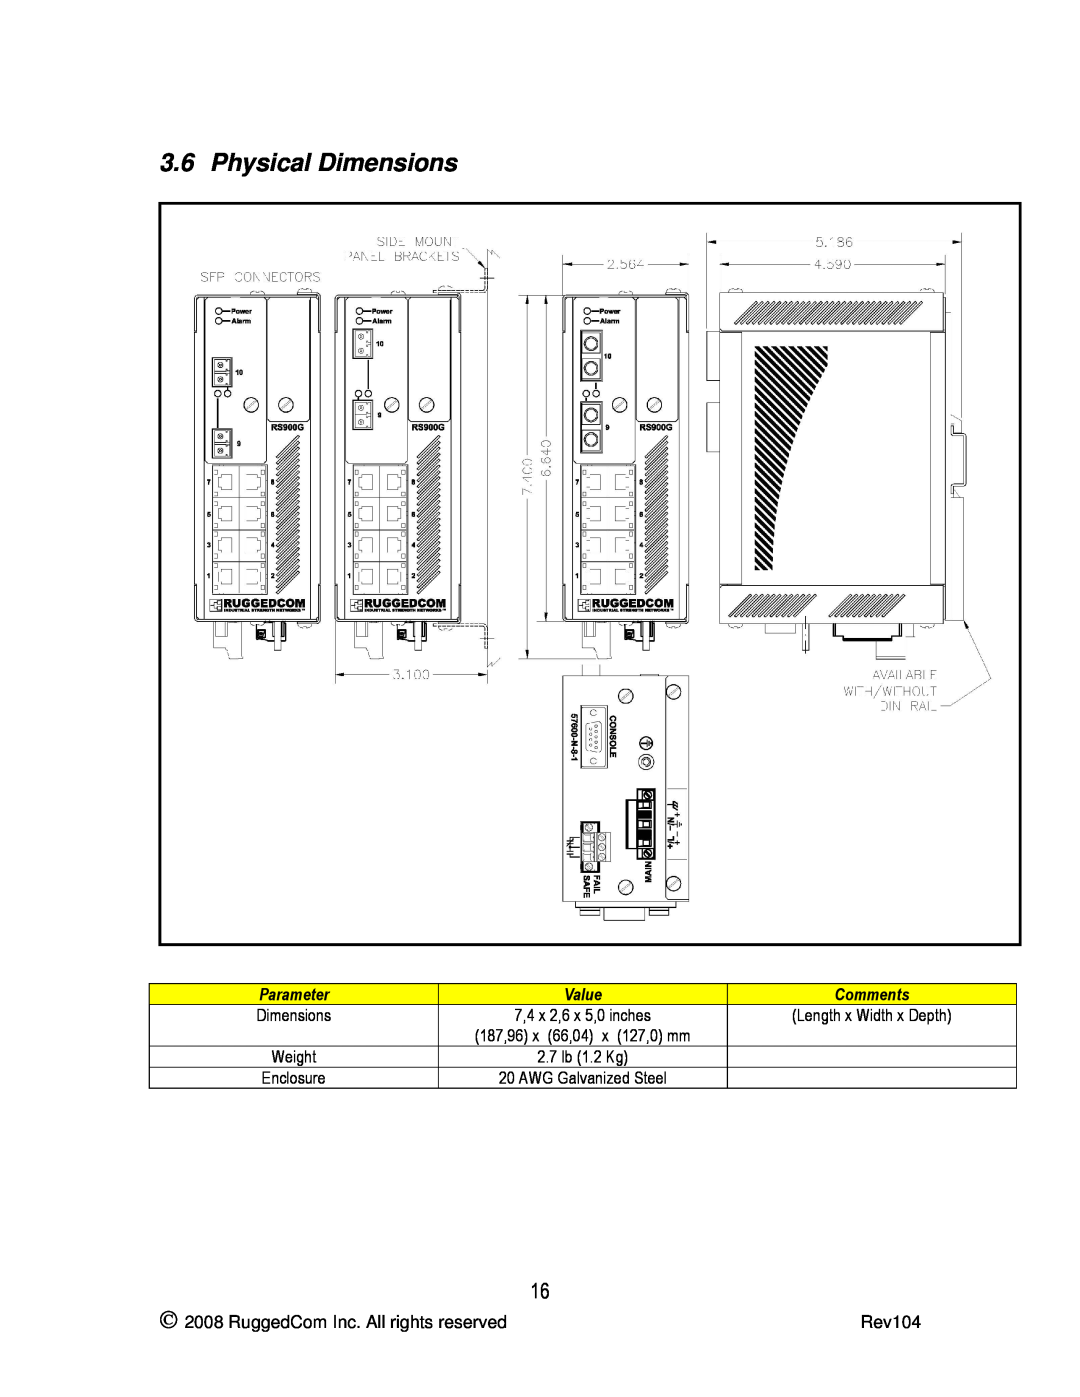 RuggedCom RS900G manual Physical Dimensions, 187,96 x 66,04, 7,4 x 2,6 x 5,0 inches 